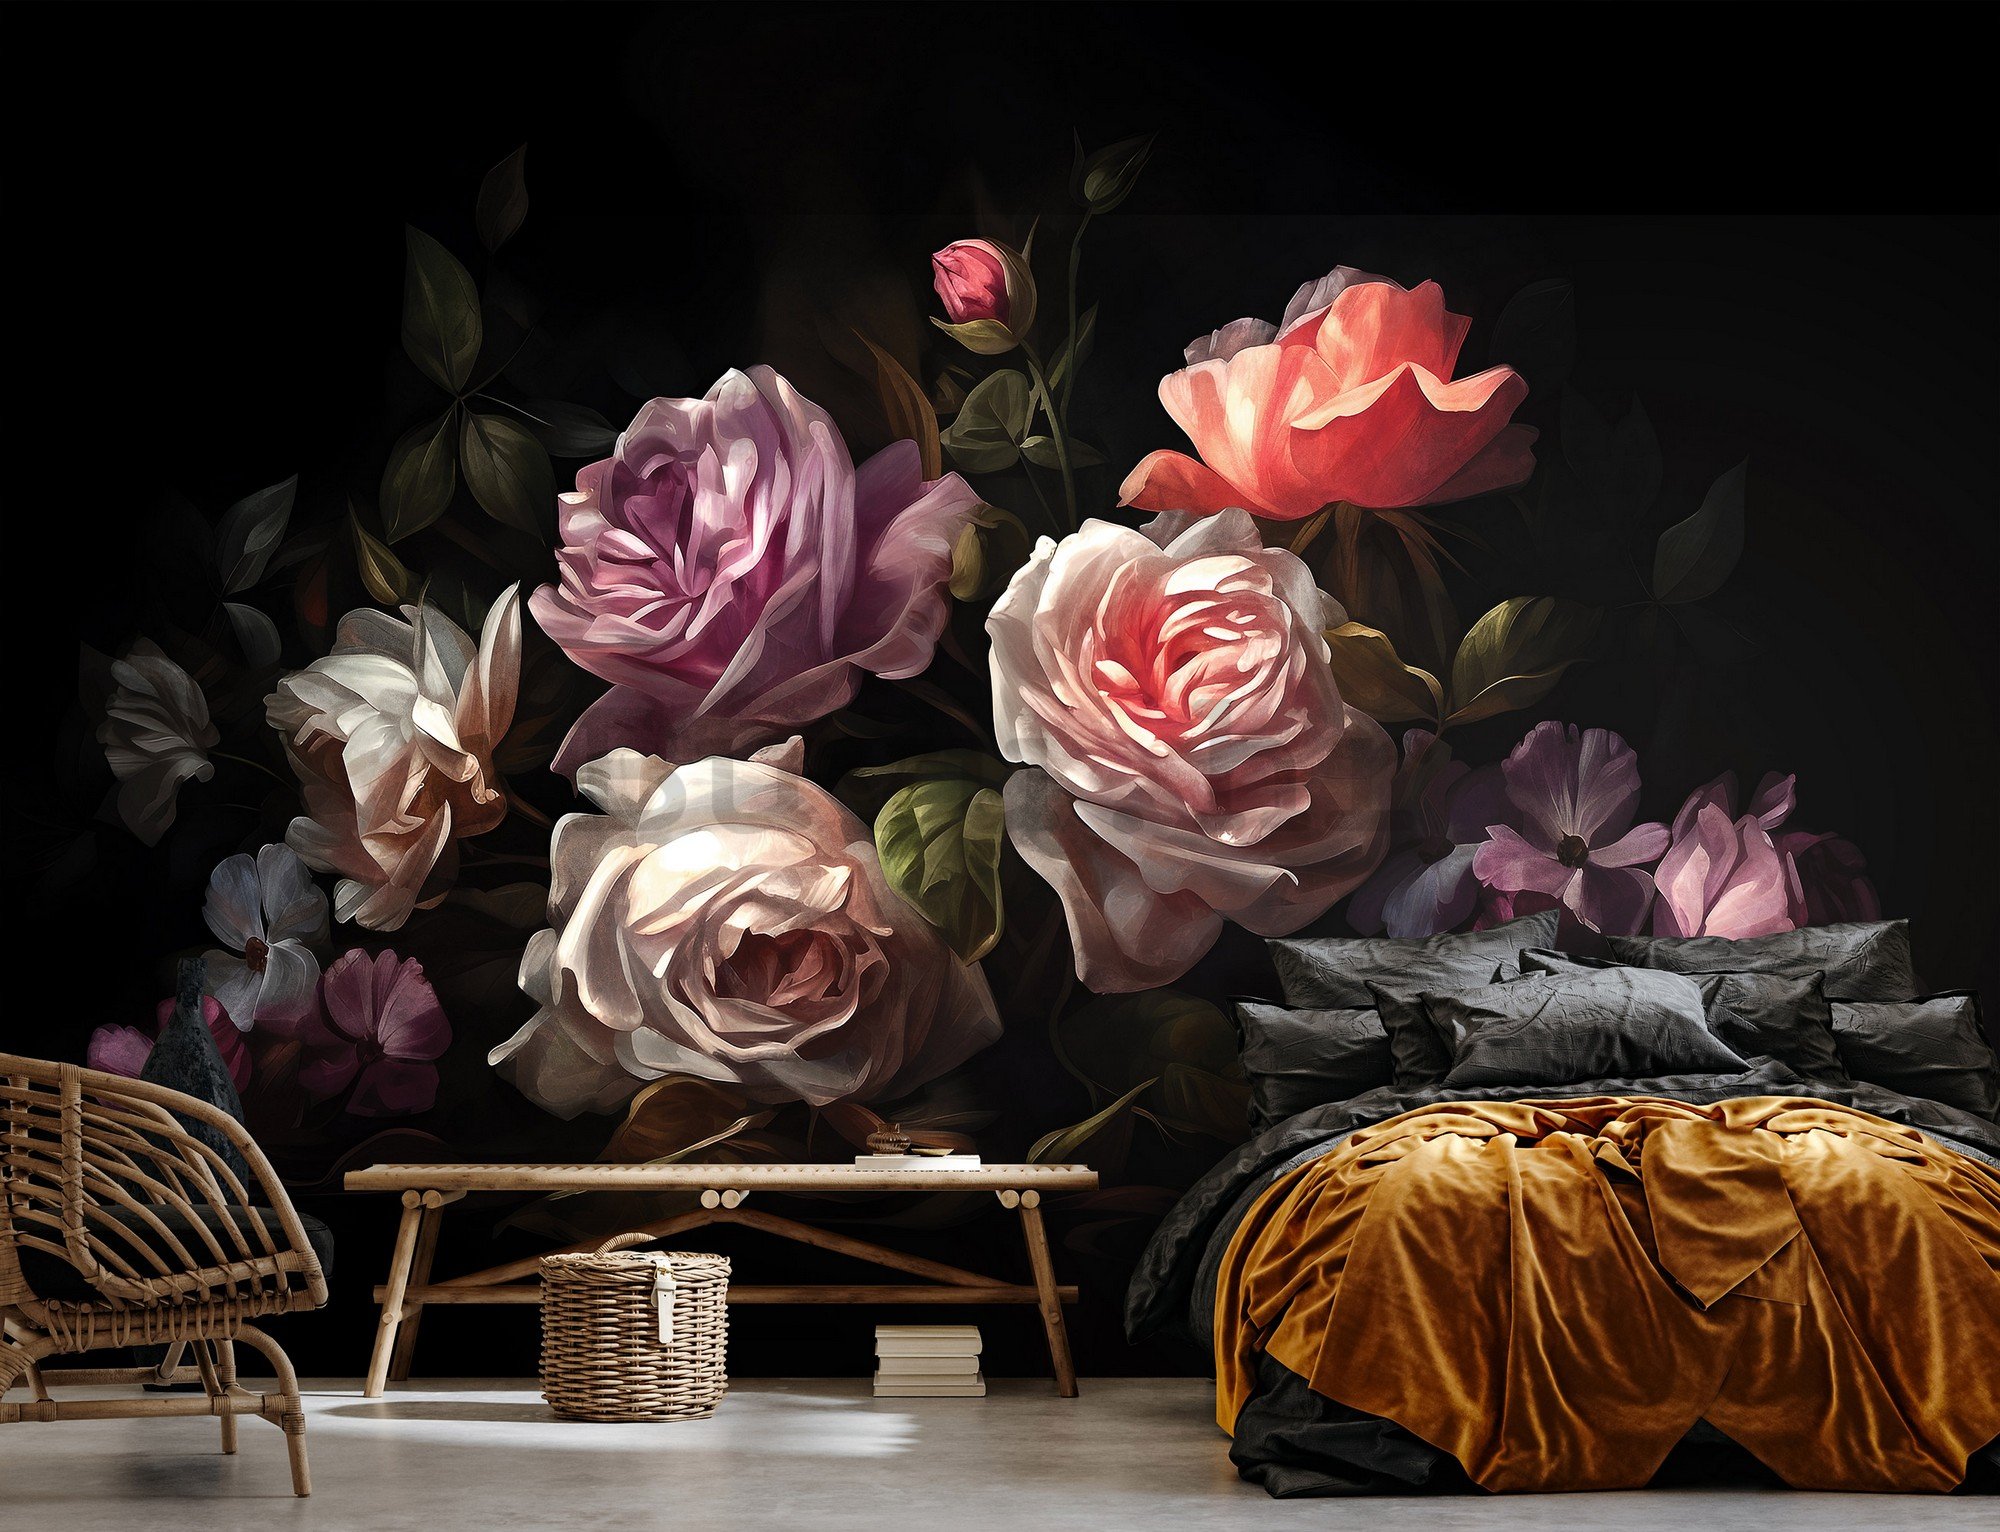 Vlies foto tapeta: Art painting flowers roses - 416x254 cm